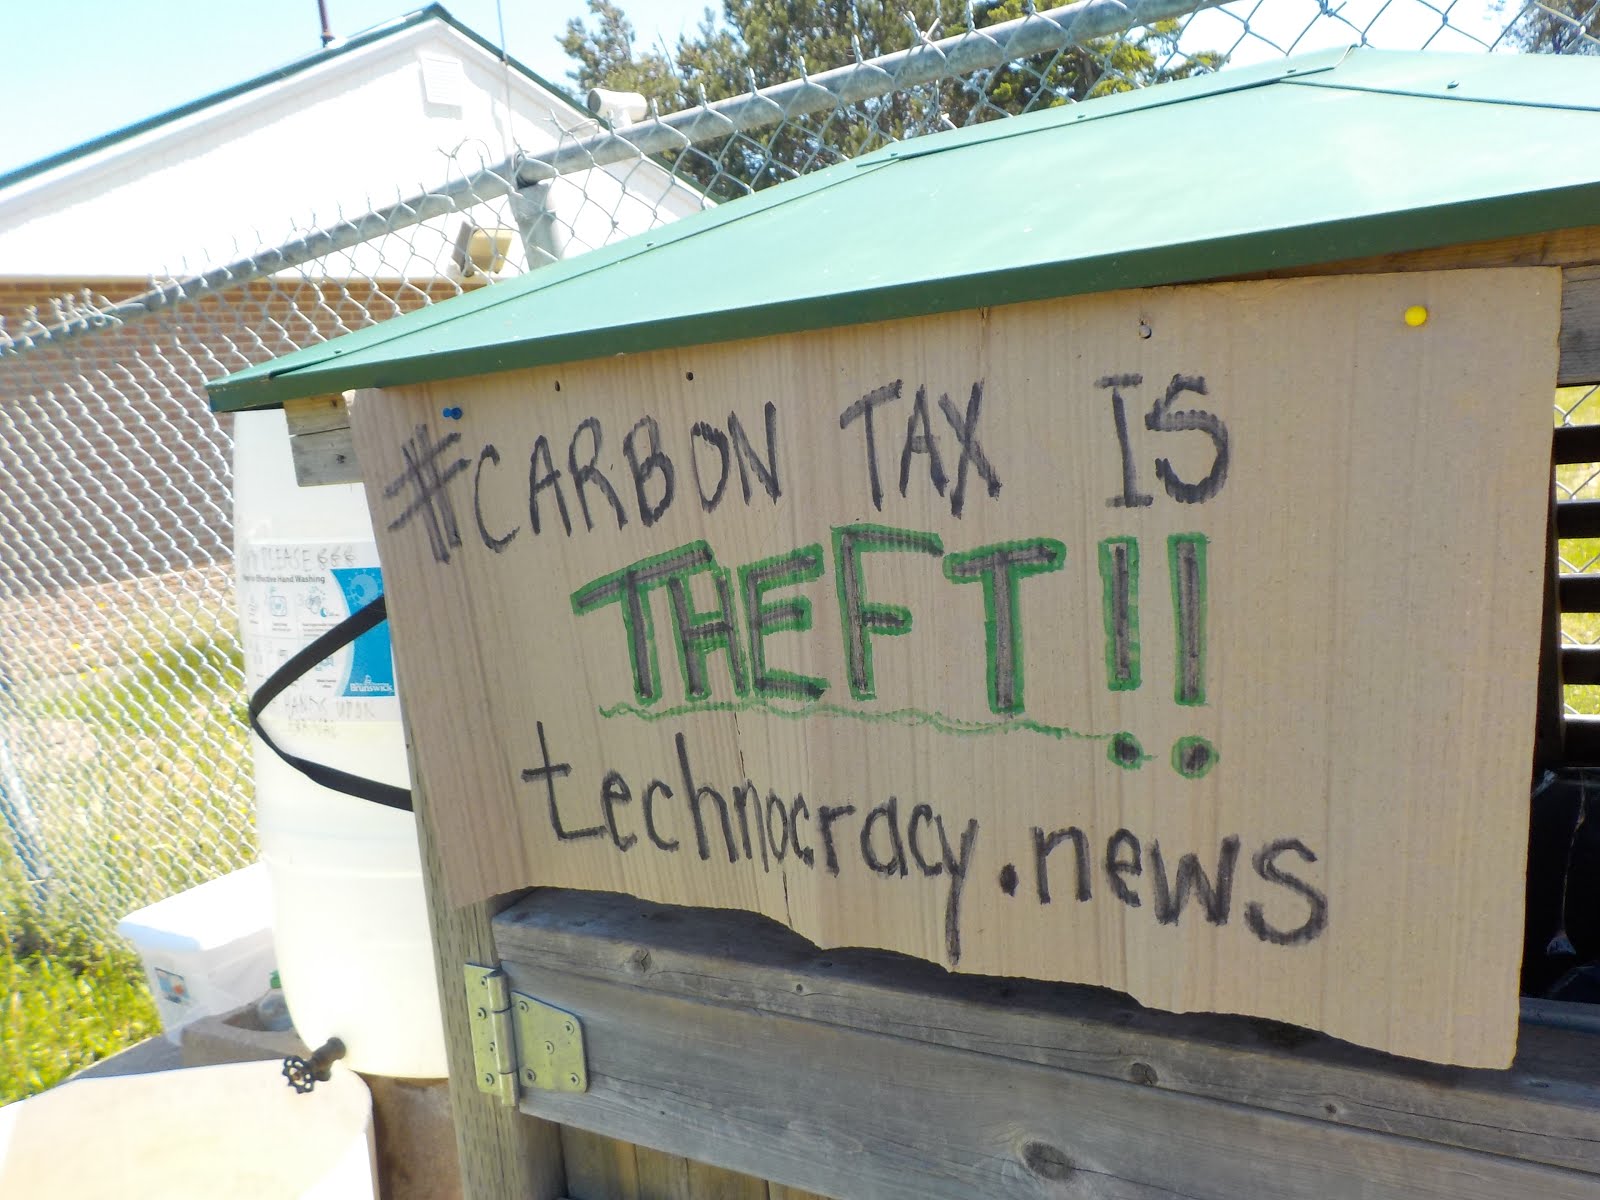 #Carbon Tax is Theft @Technocracy.news